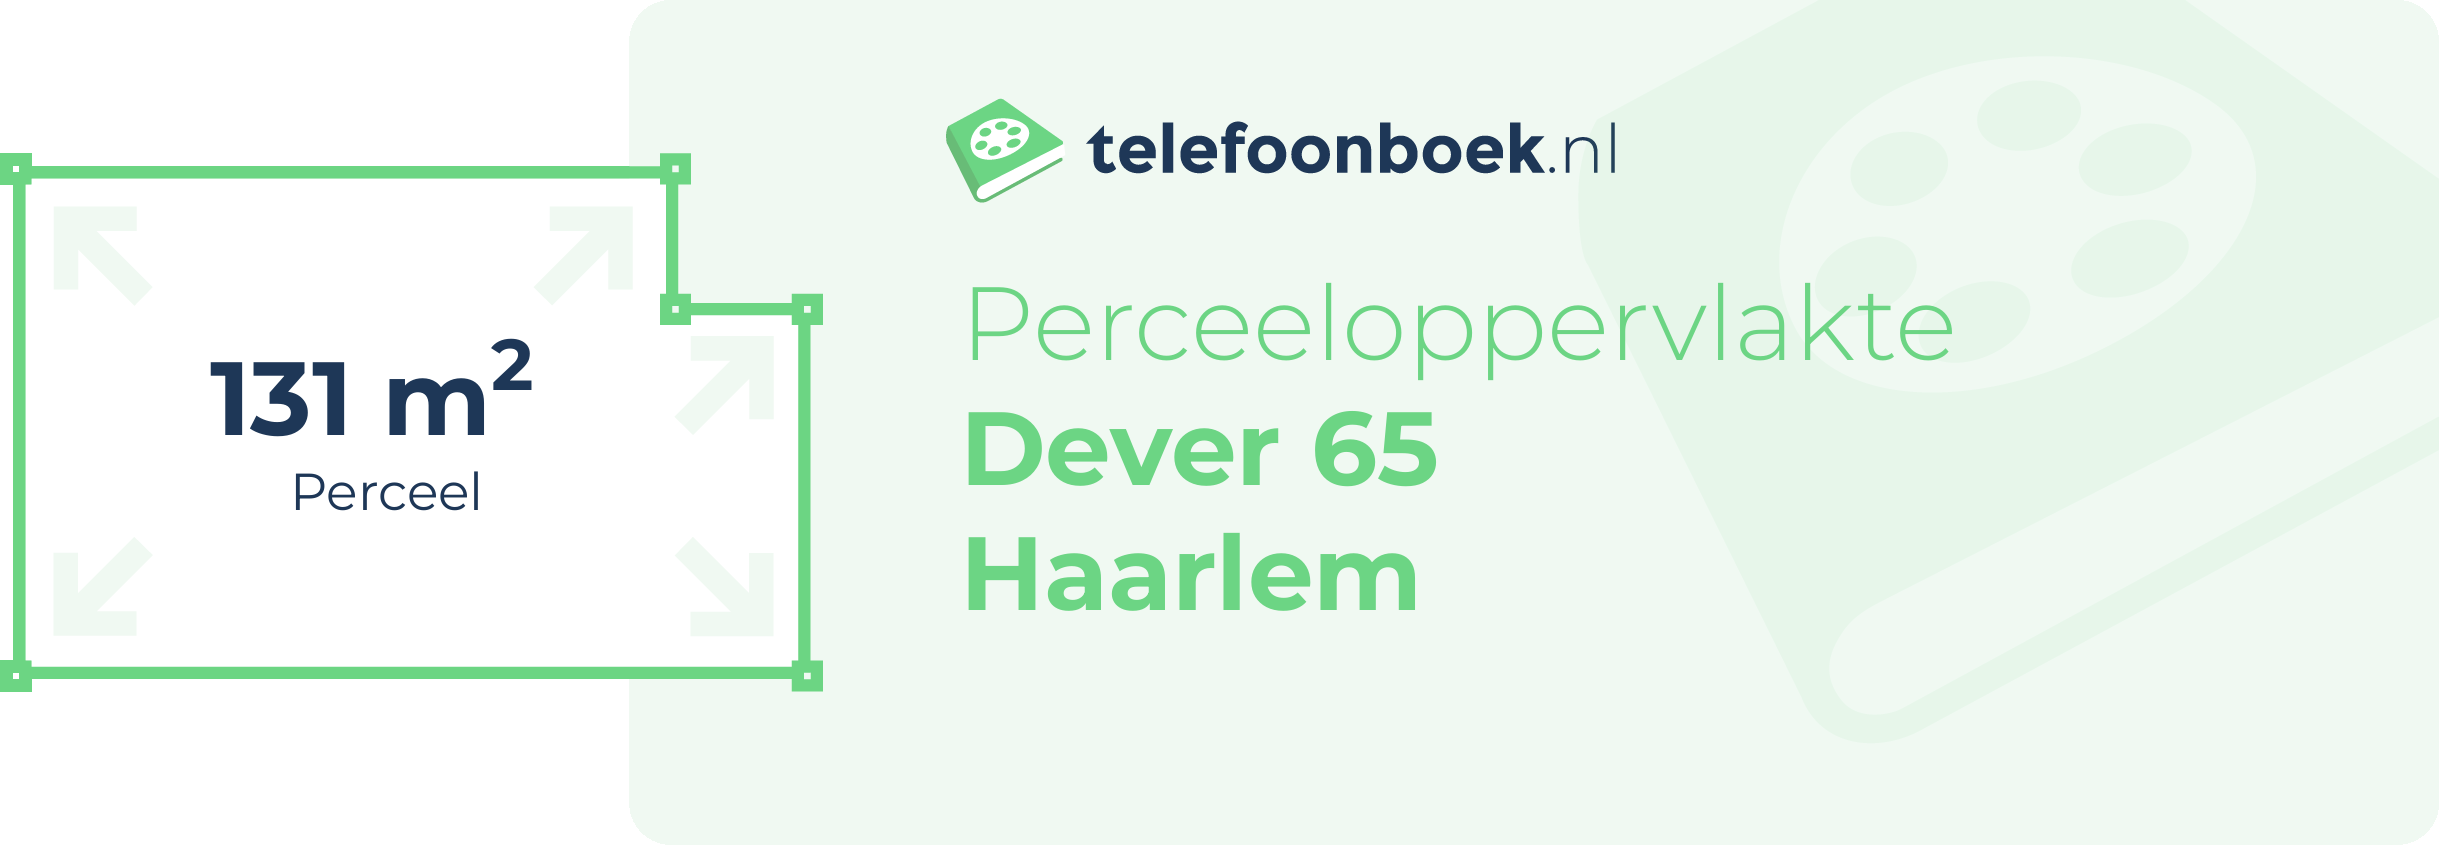 Perceeloppervlakte Dever 65 Haarlem